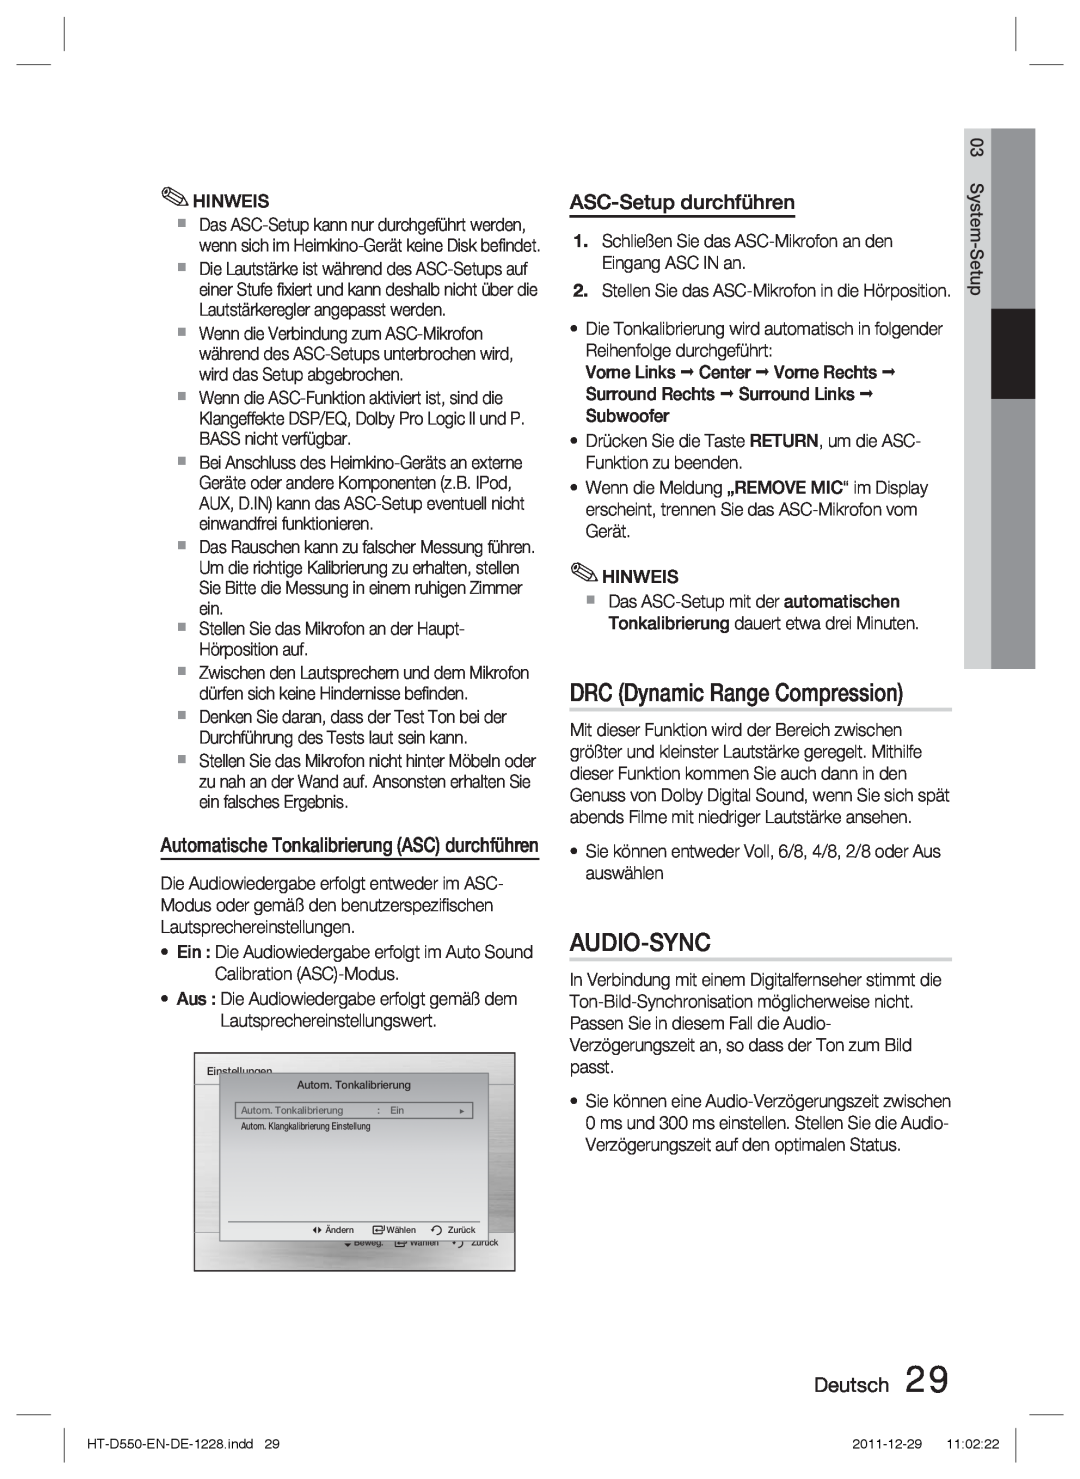 Samsung HT-D555/XE, HT-D550/XN, HT-D555/TK manual Audio-Sync, ASC-Setup durchführen, DRC Dynamic Range Compression, Deutsch 